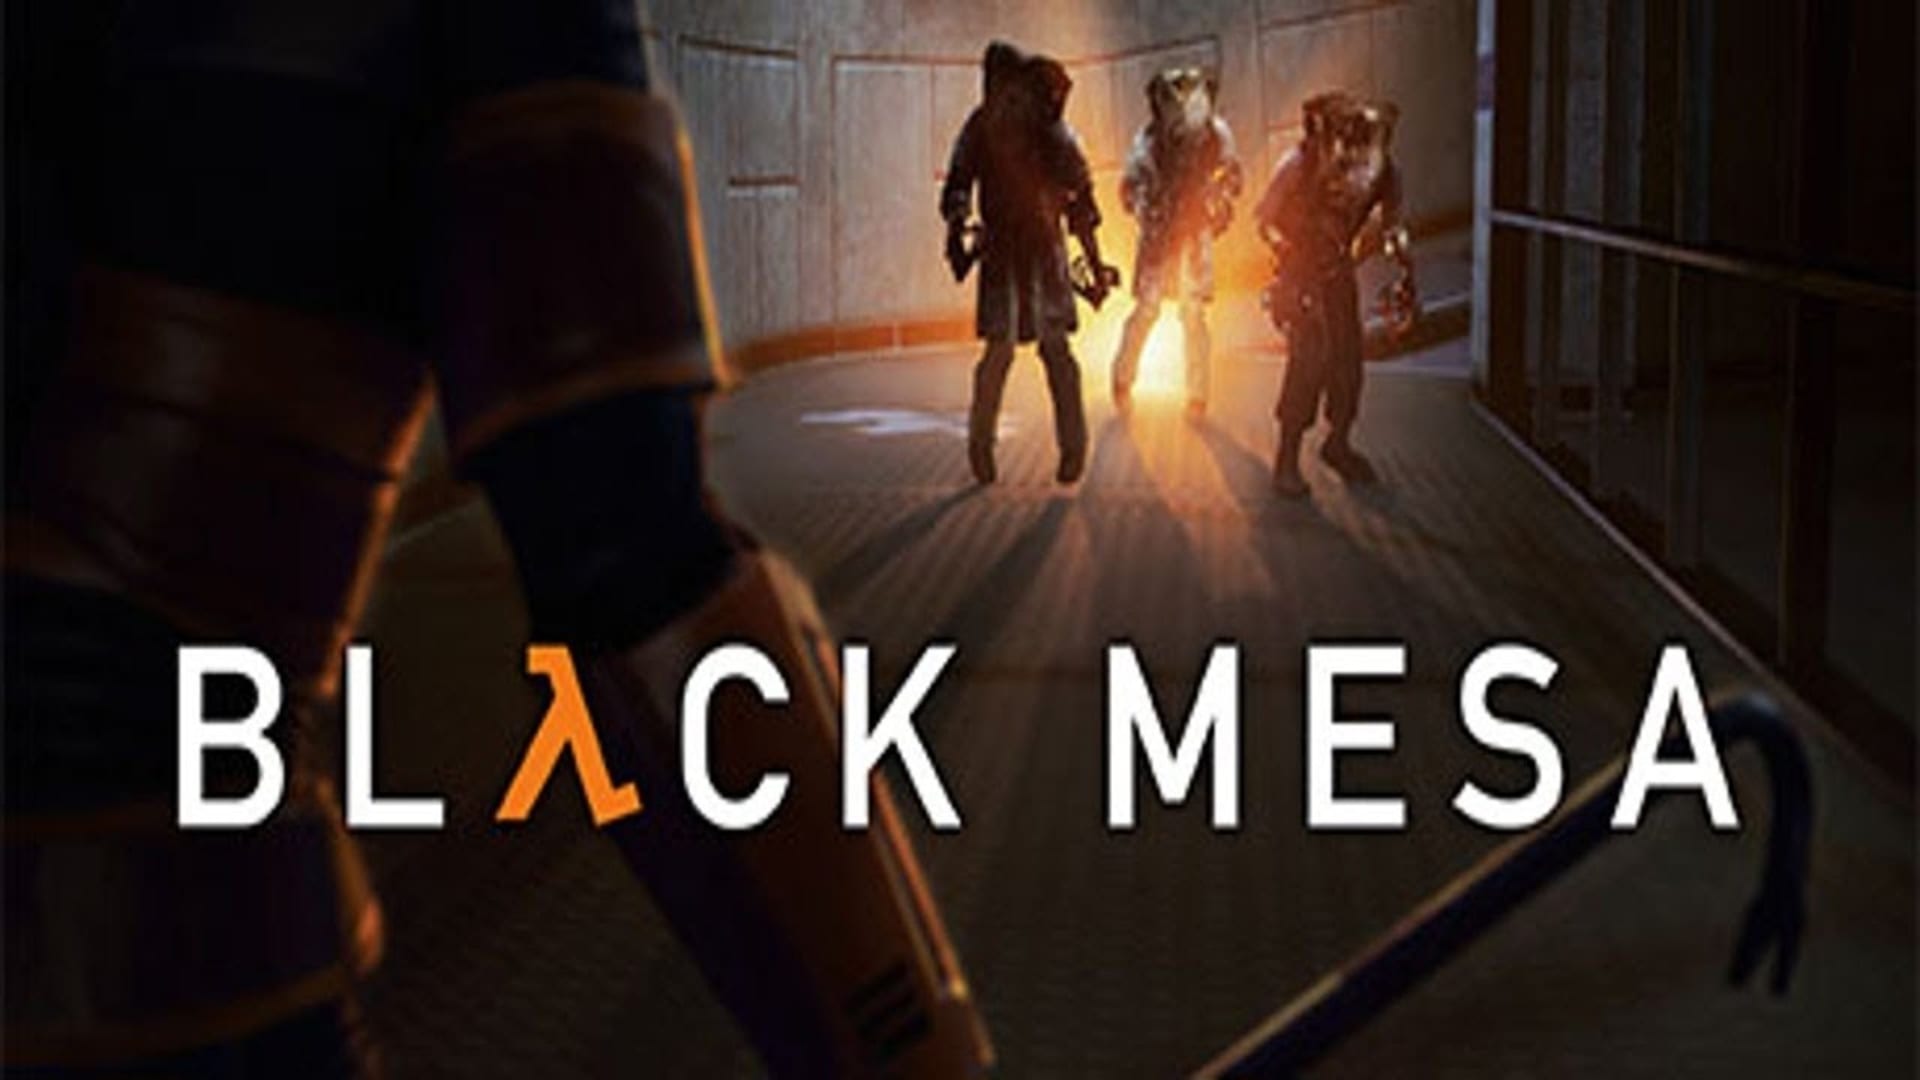 Black Mesa